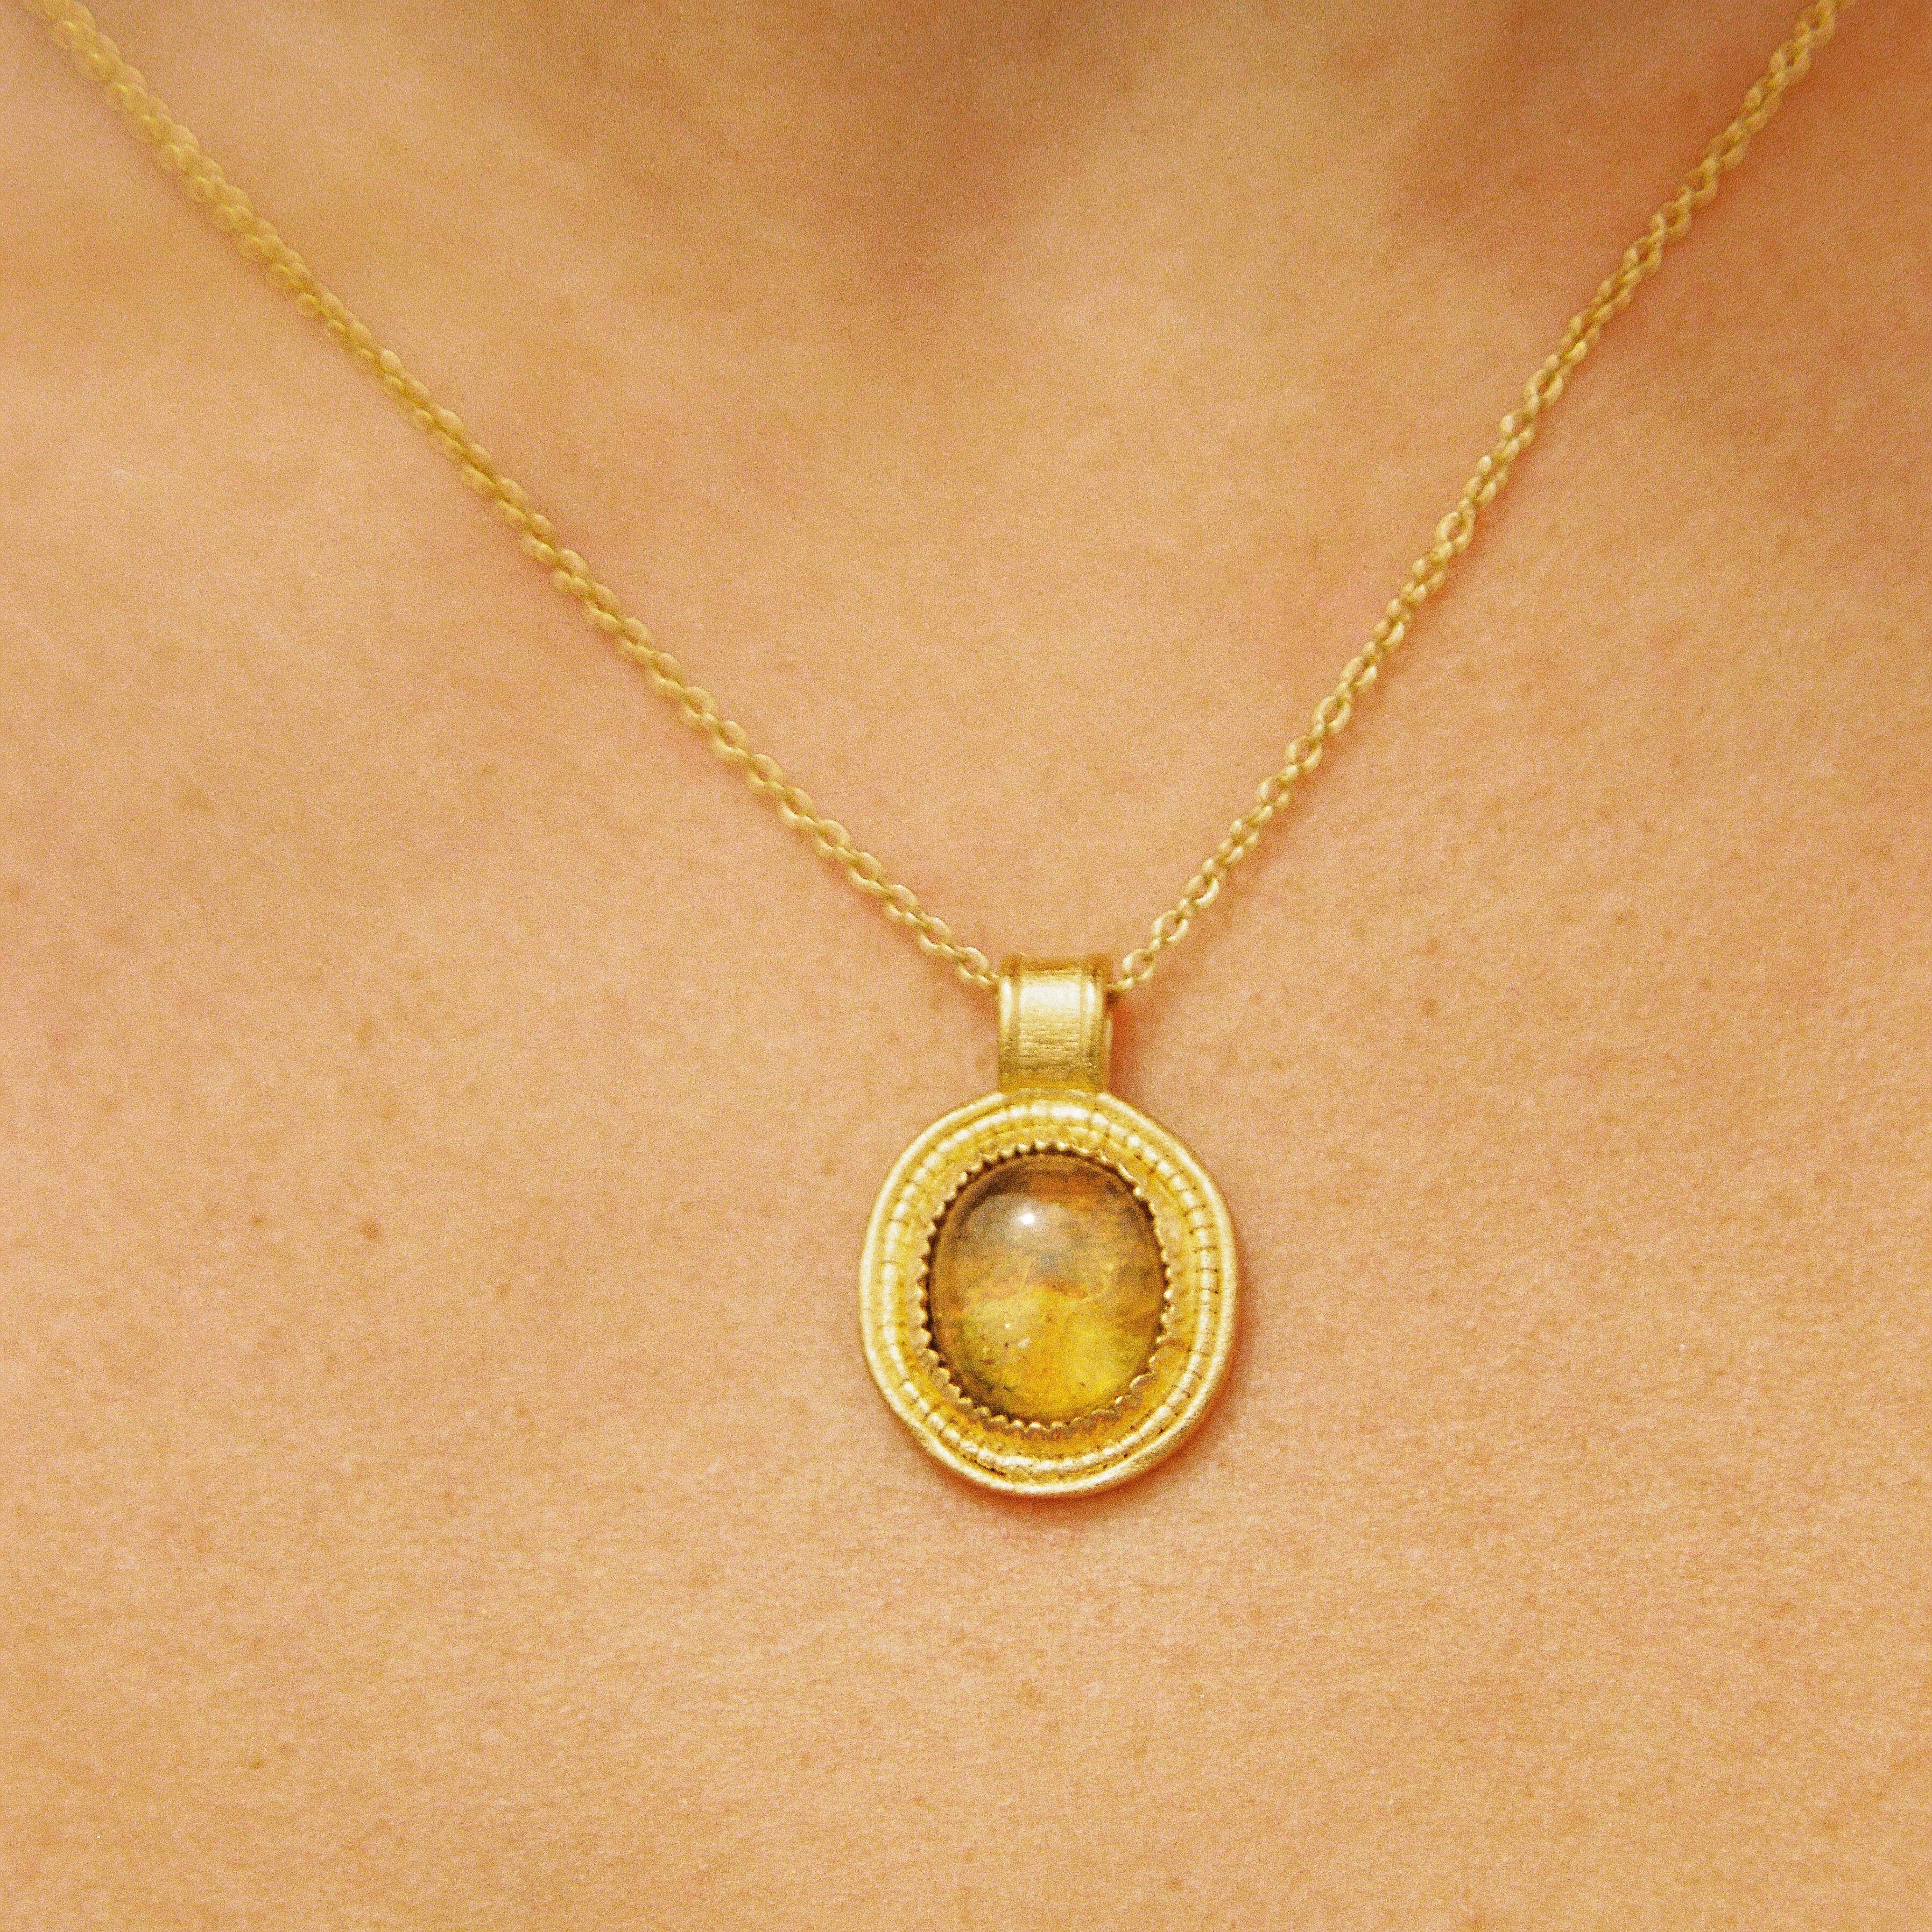 Lumi Necklace | Jewelry Gold Gift Waterproof